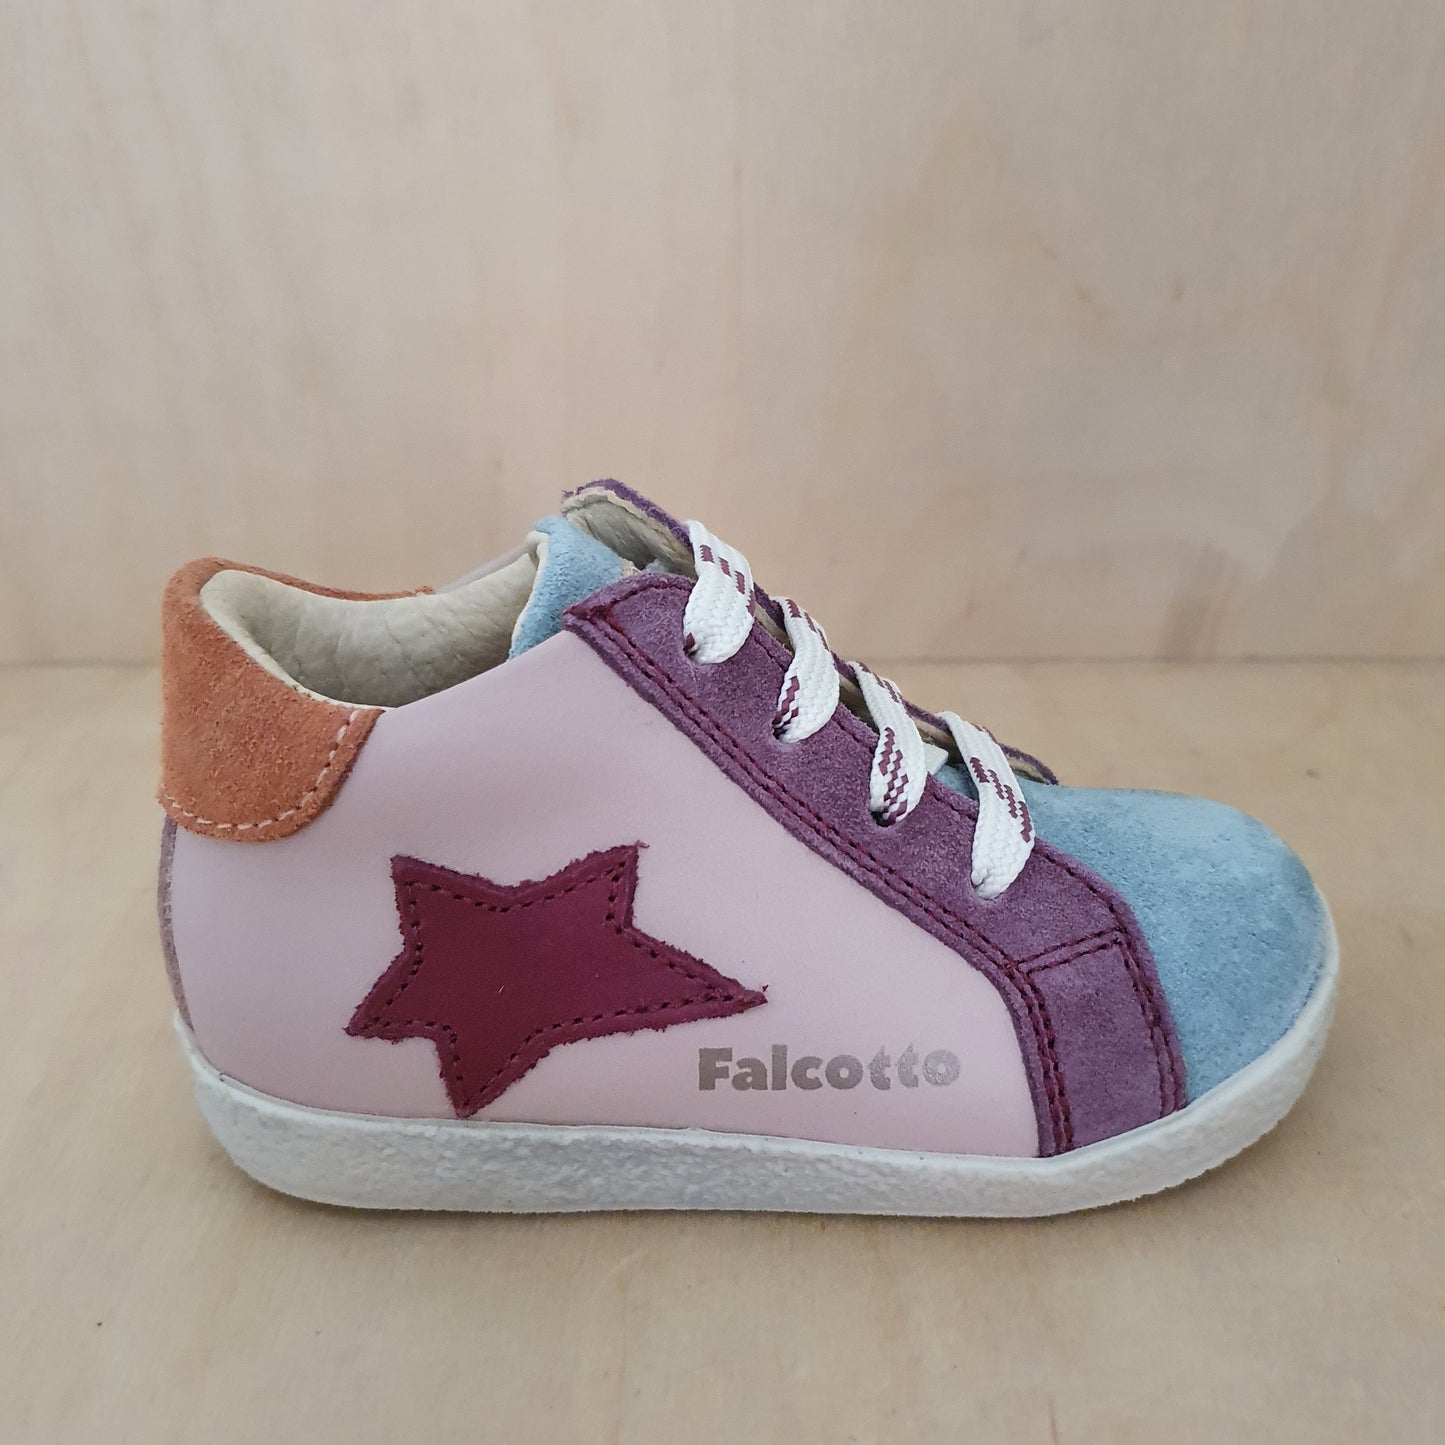 FALCOTTO - stapsneaker alnoite high - eyelets artic cipria